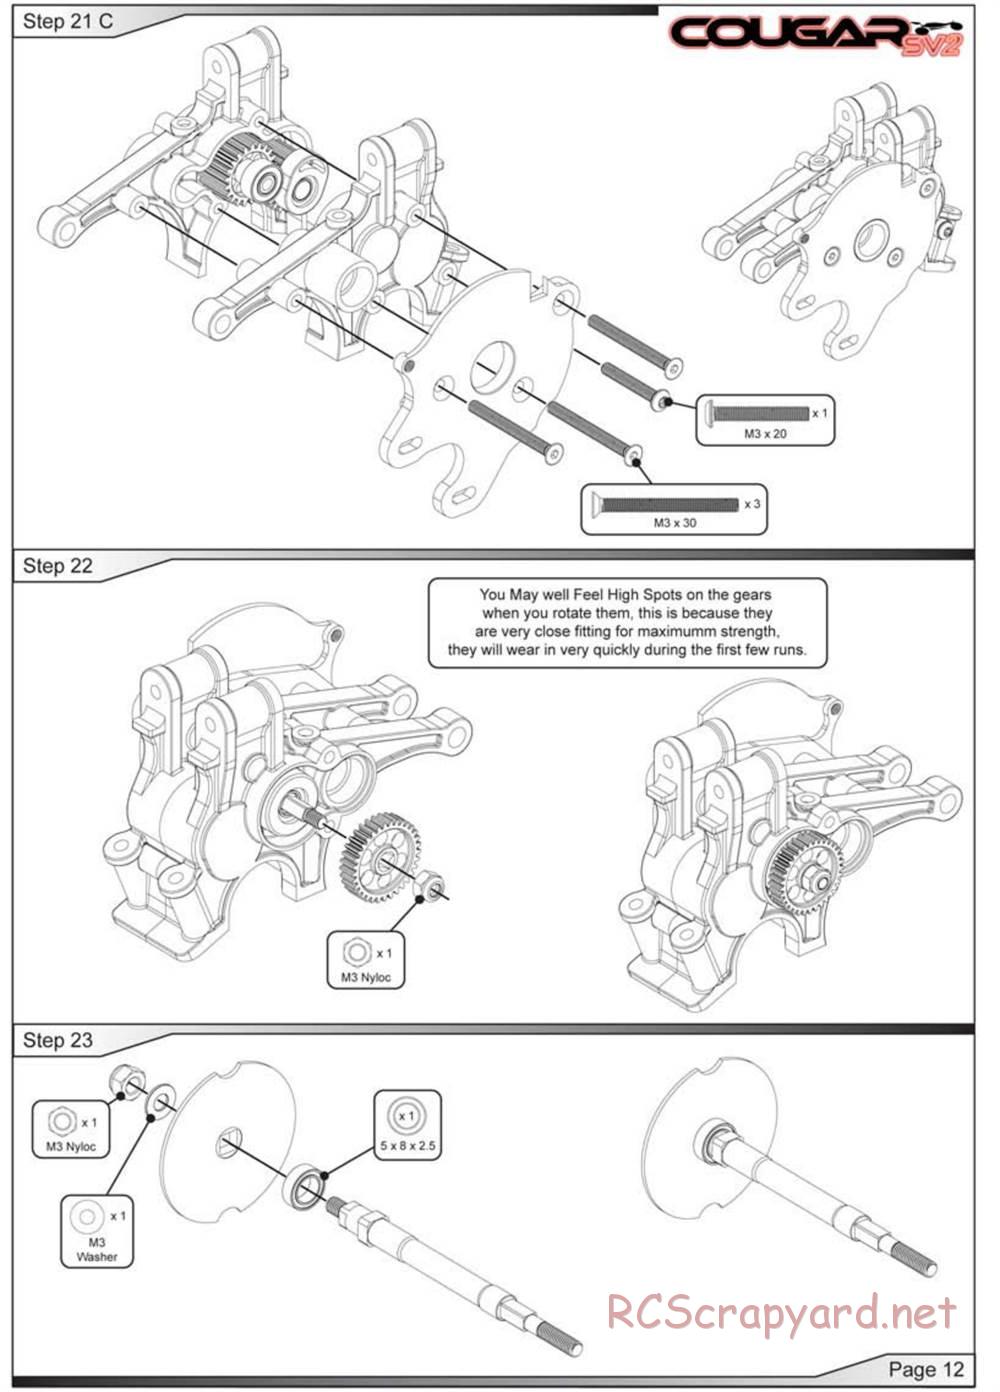 Schumacher - Cougar SV2 - Manual - Page 13